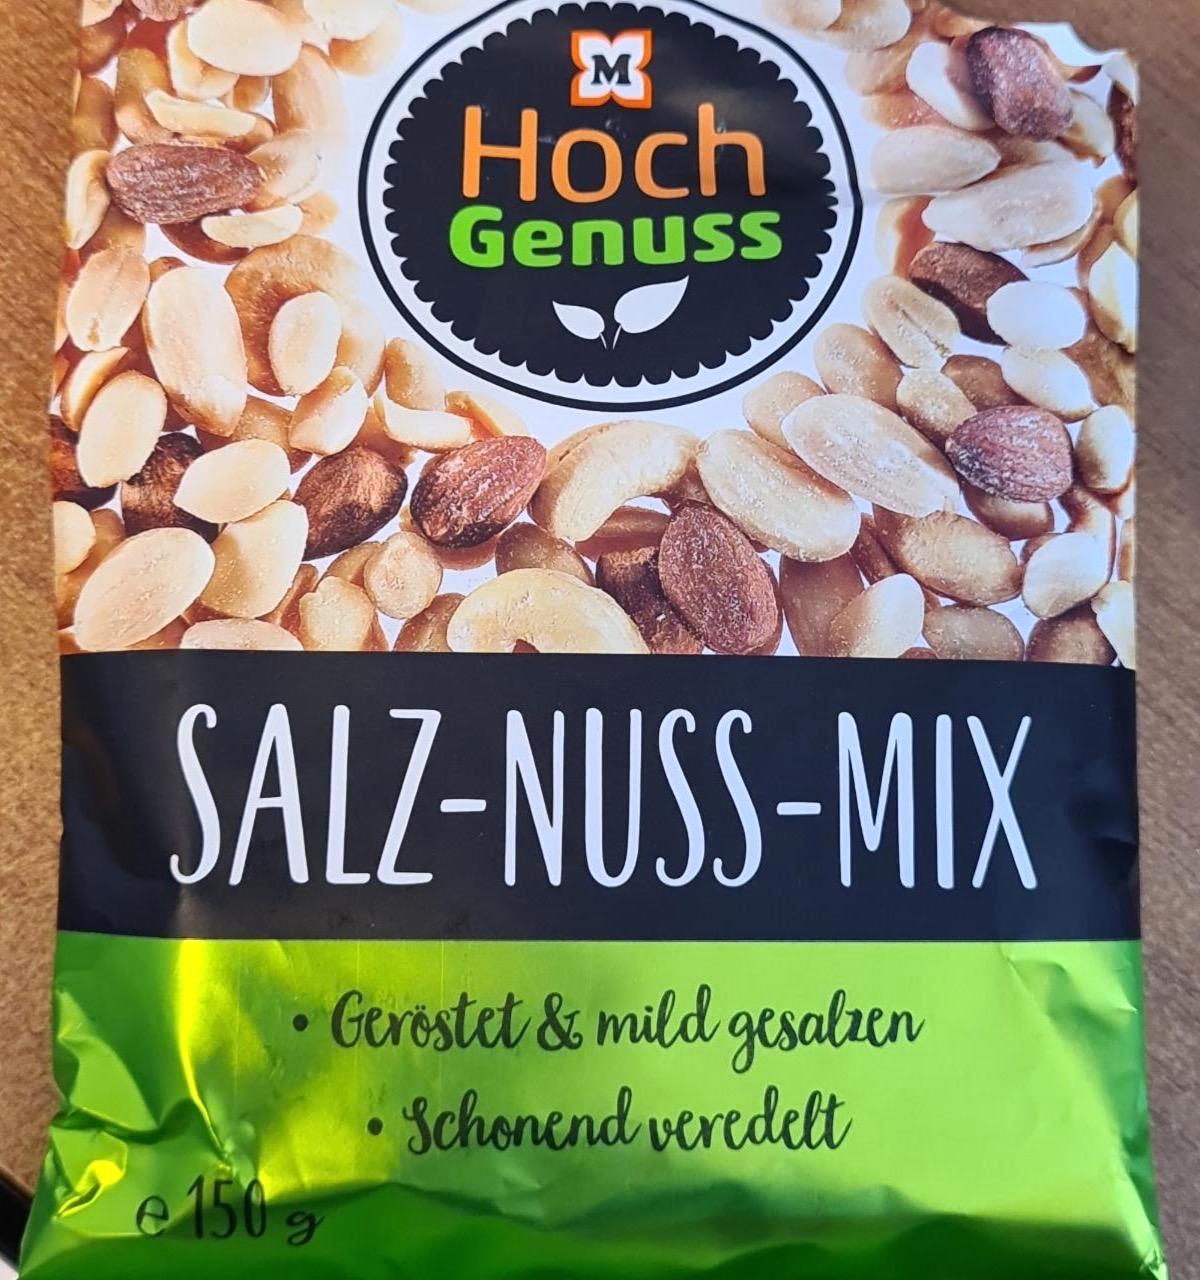 Képek - Hoch Genuss sós magkeverék Müller